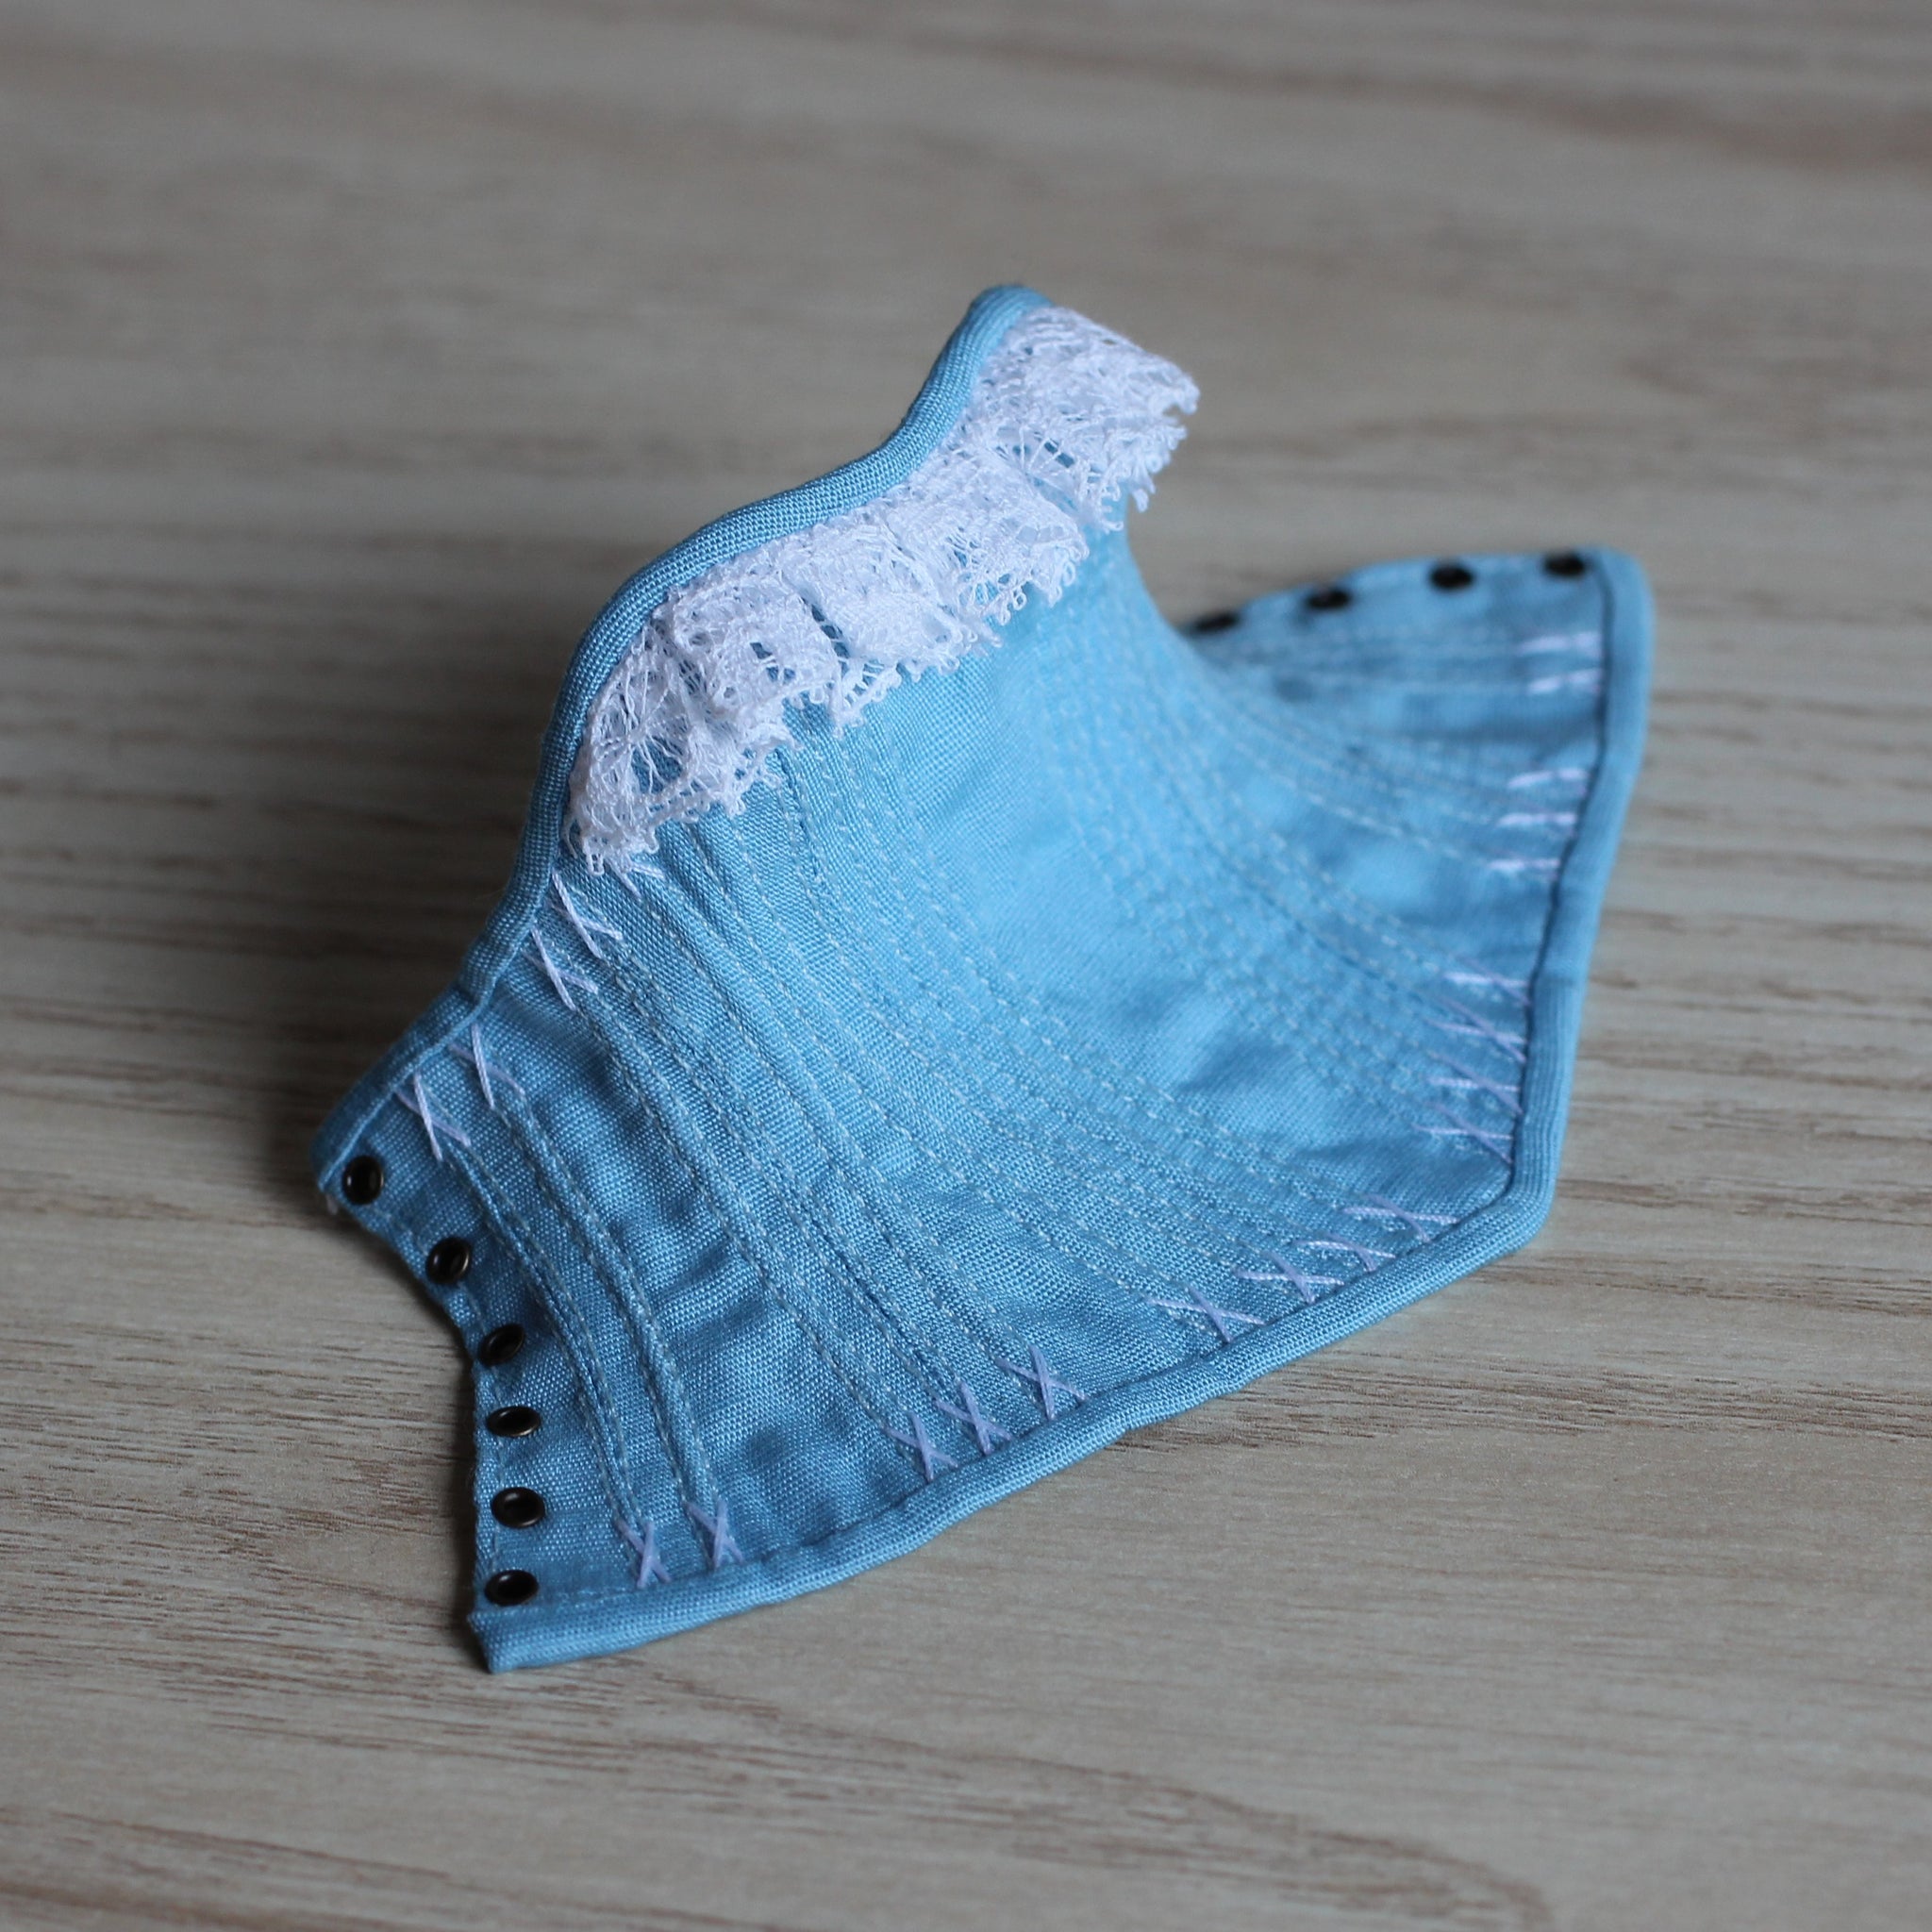 Baby blue corset A (Limited) – VestasSpell